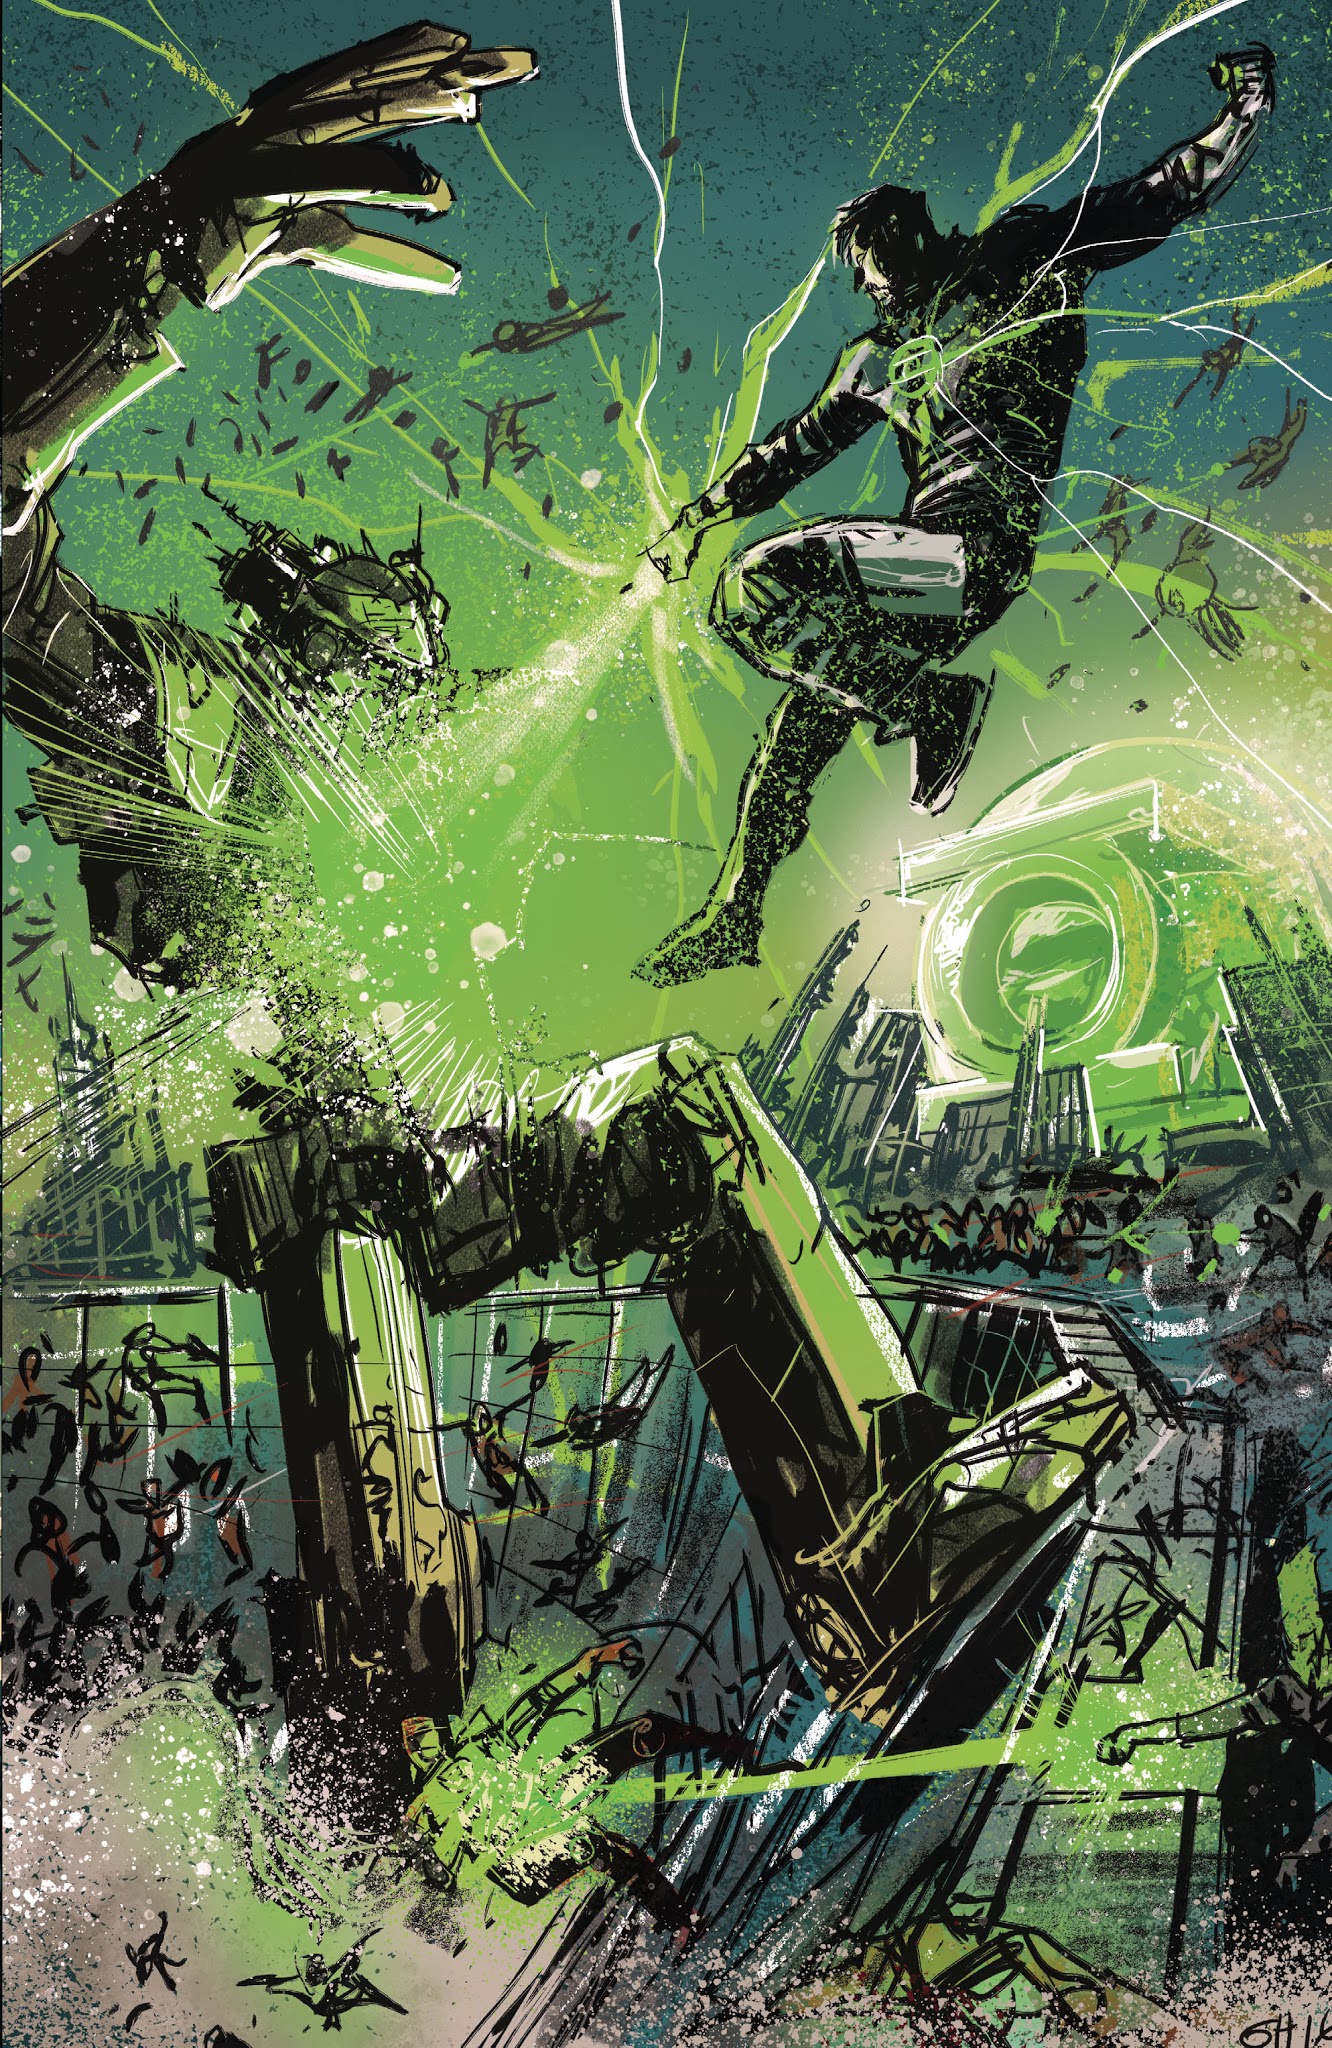 Read online Green Lantern: Earth One comic -  Issue # TPB 1 - 141